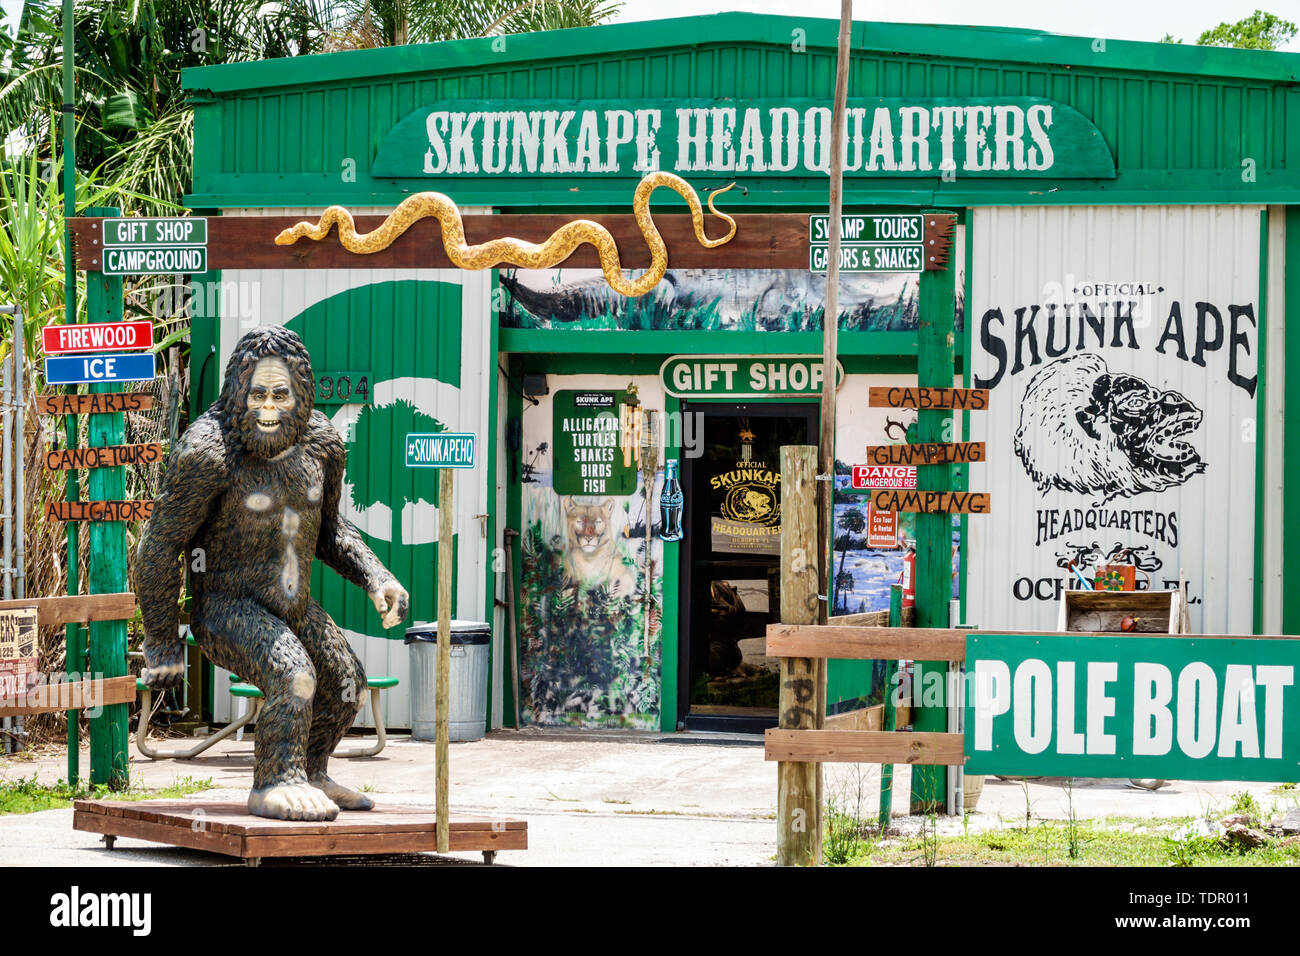 Florida Ochopee Everglades Tamiami Trail, Skunkape Skunk Ape Research Headquarters vor dem Eingang, Attraktion am Straßenrand Fabelwesen Skulptur, Stockfoto